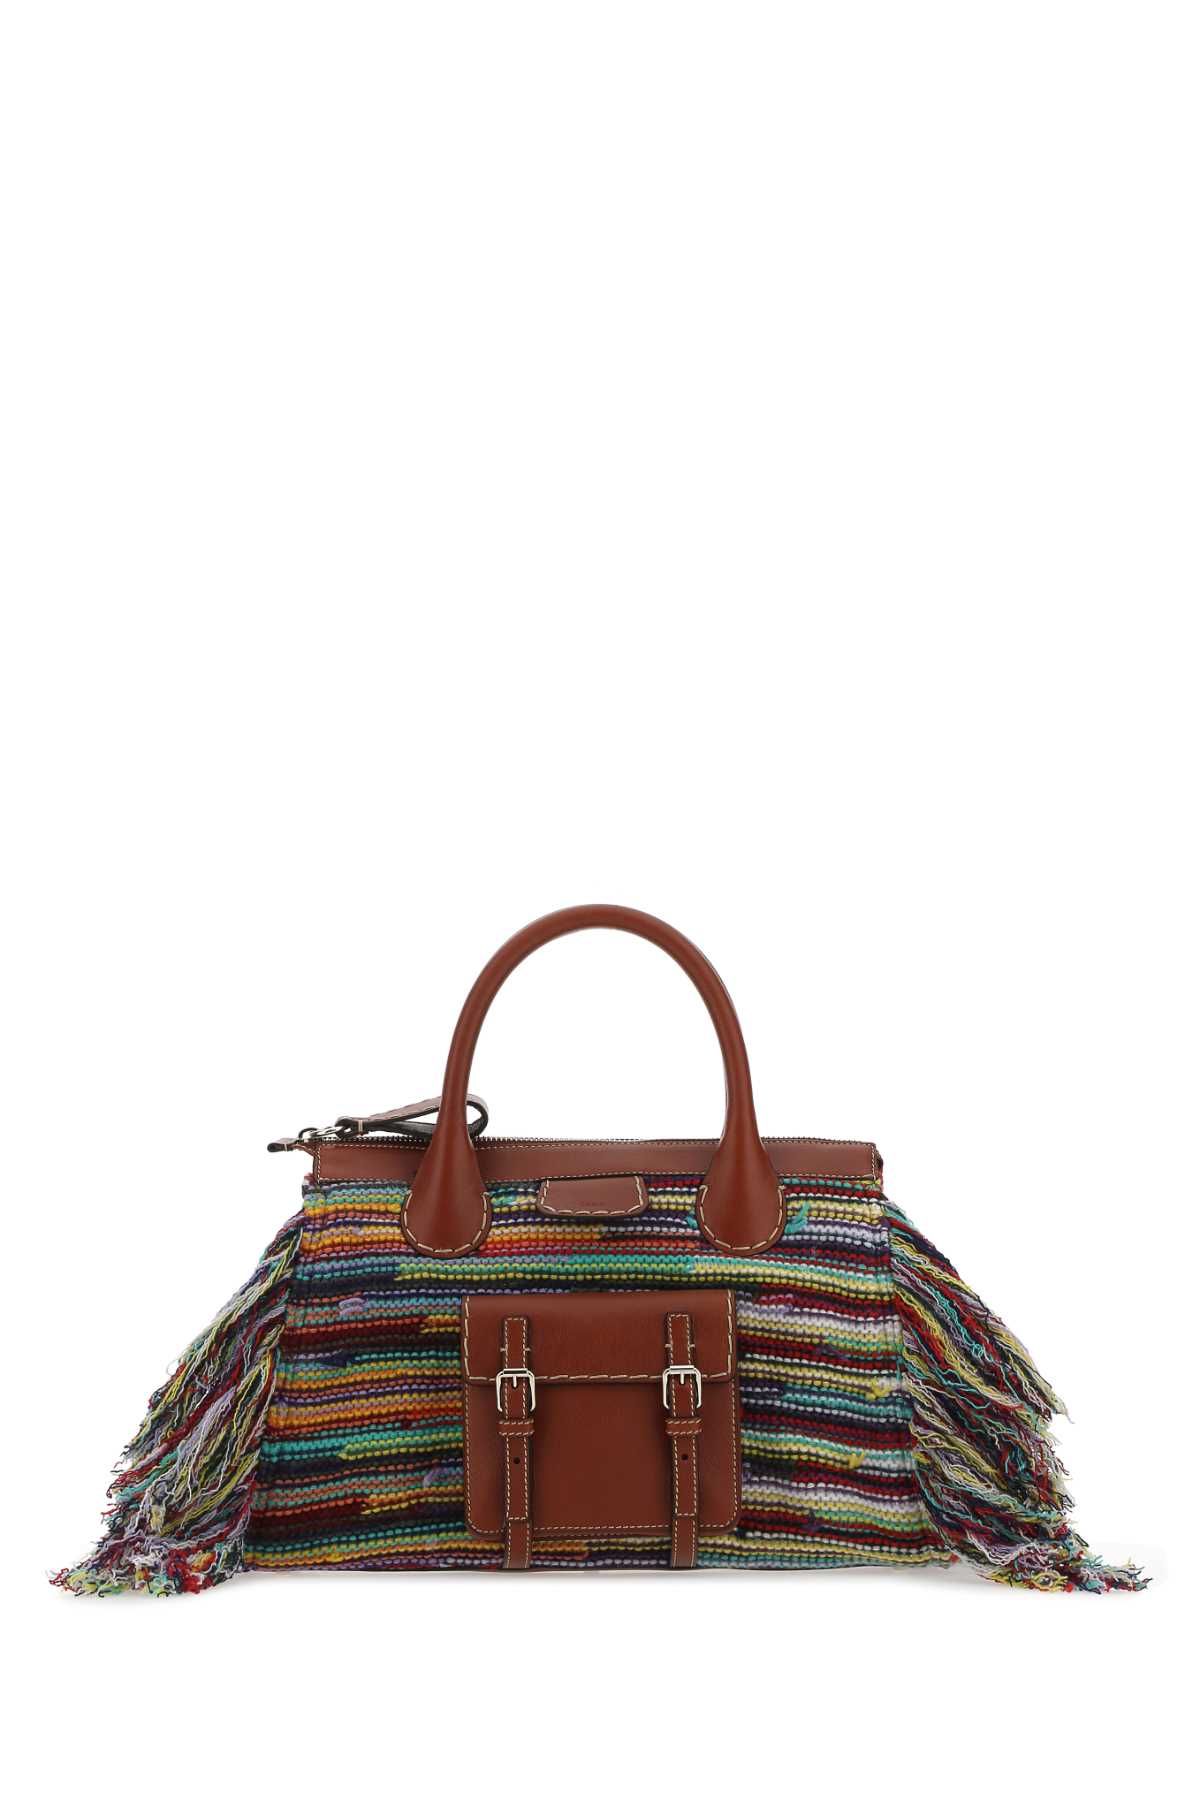 Chloé Multicolor Leather And Cashmere Medium Edith Handbag